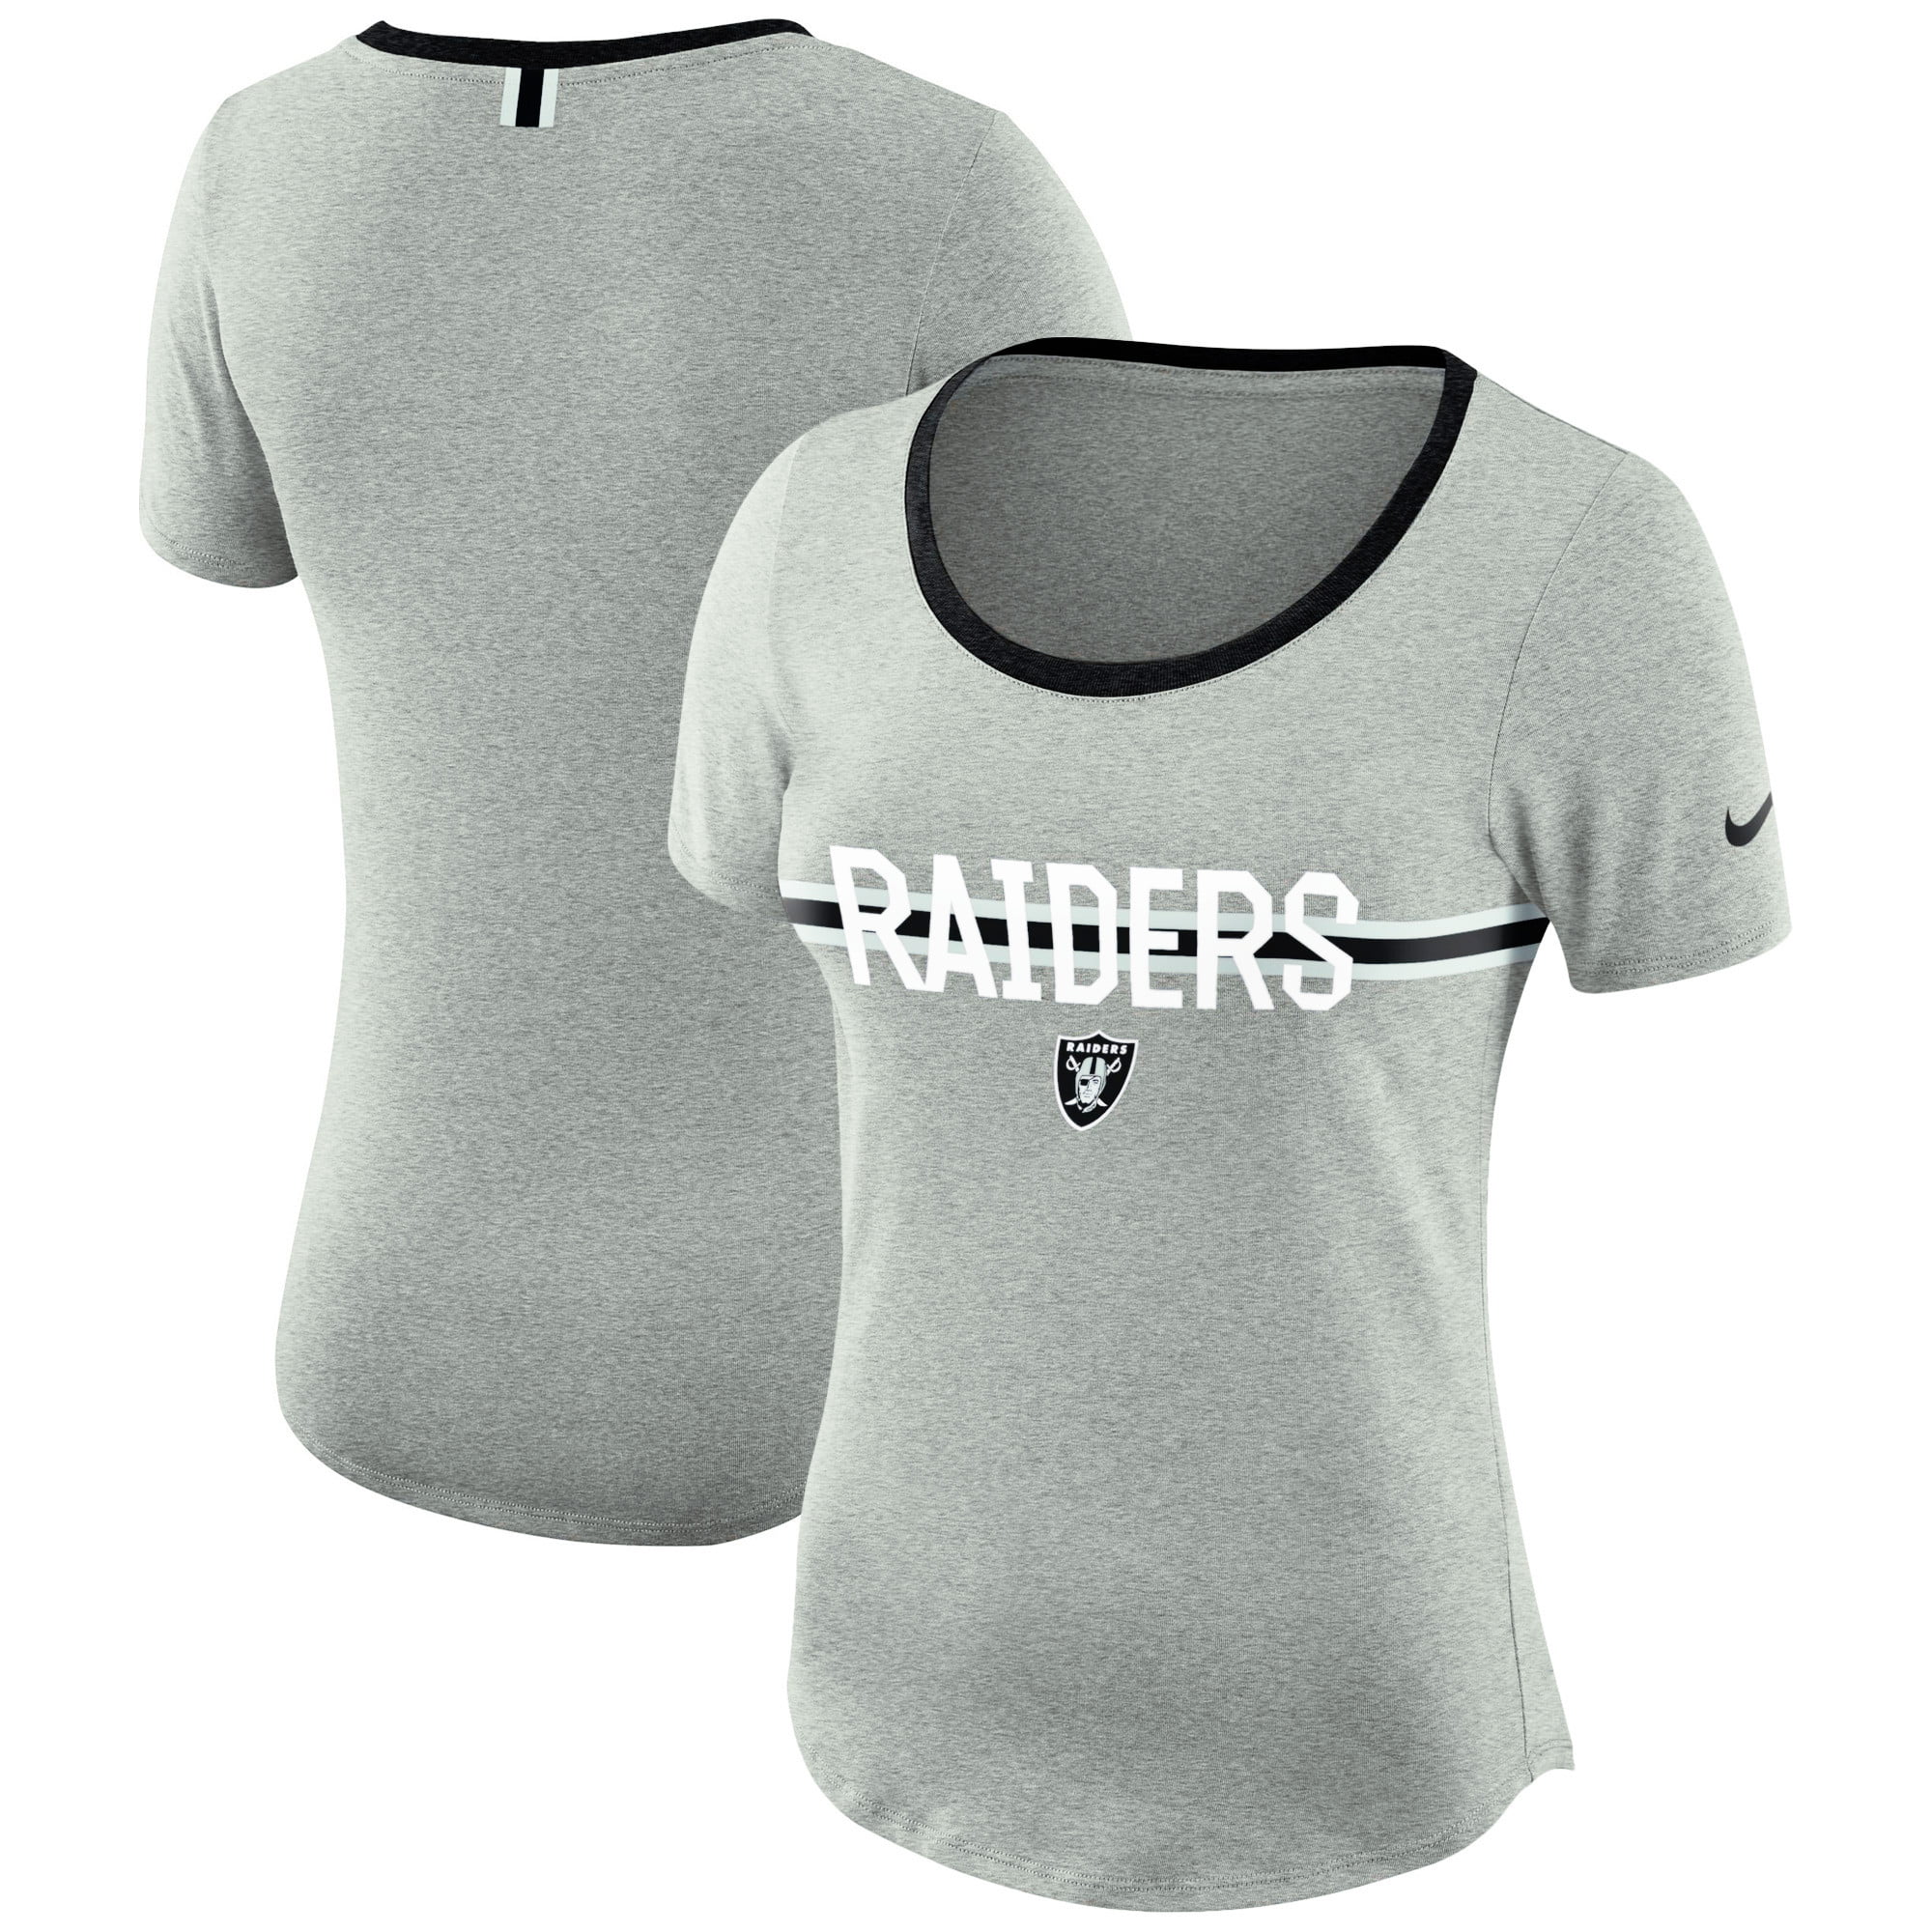 Lightweight ArtVerse NFS Oakland Football Stripes Womens Short Sleeve T-Shirt Large White and Silver 